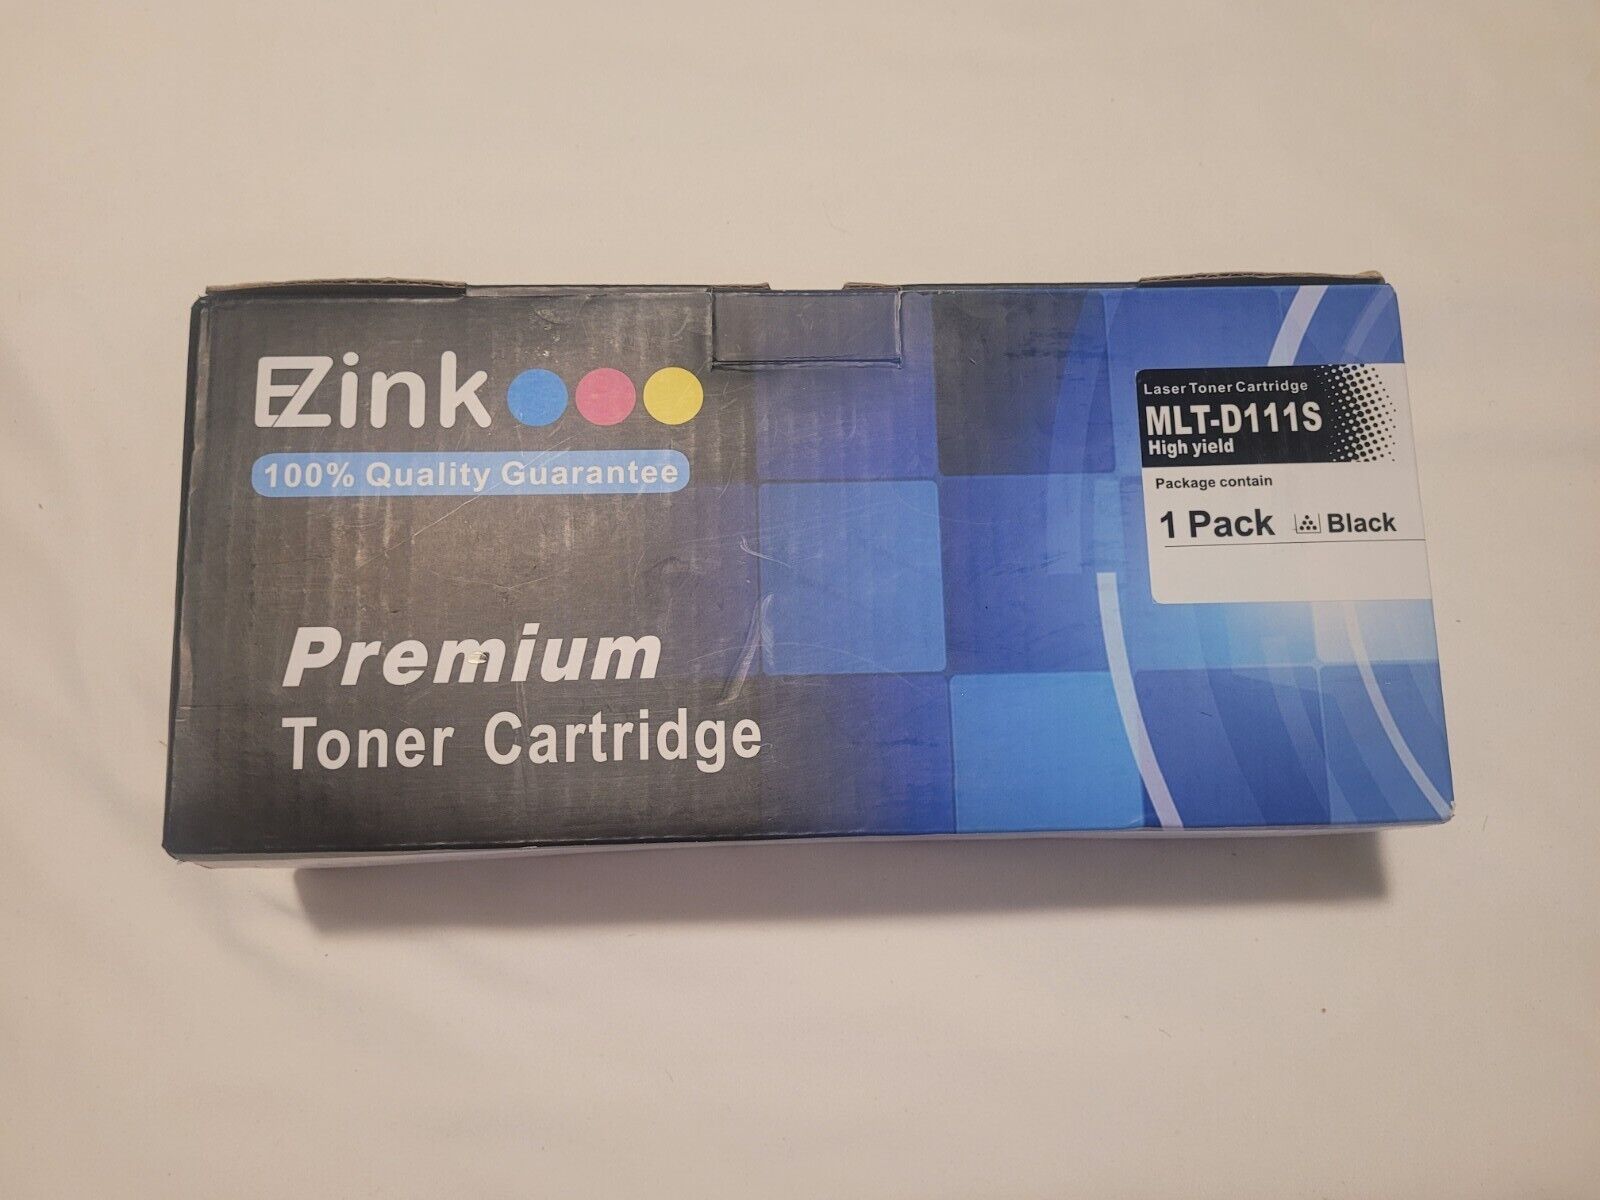 EZink Premium Toner Cartridge MLT-D111S High Yield Sealed Multicolor 